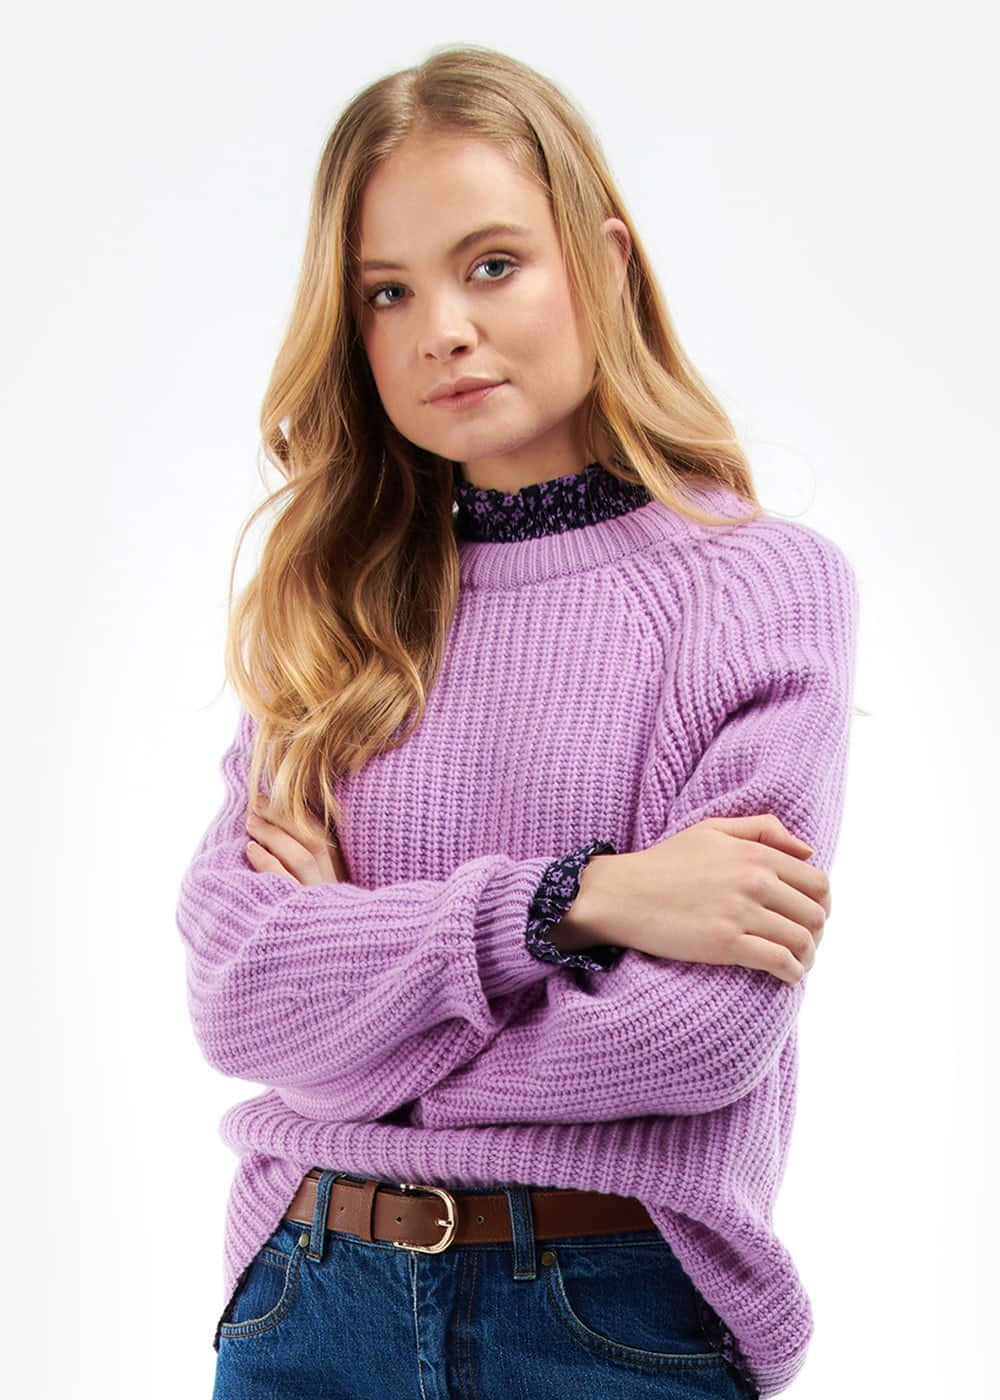 Look fabulous in this stylish purple turtleneck sweater Wallpaper